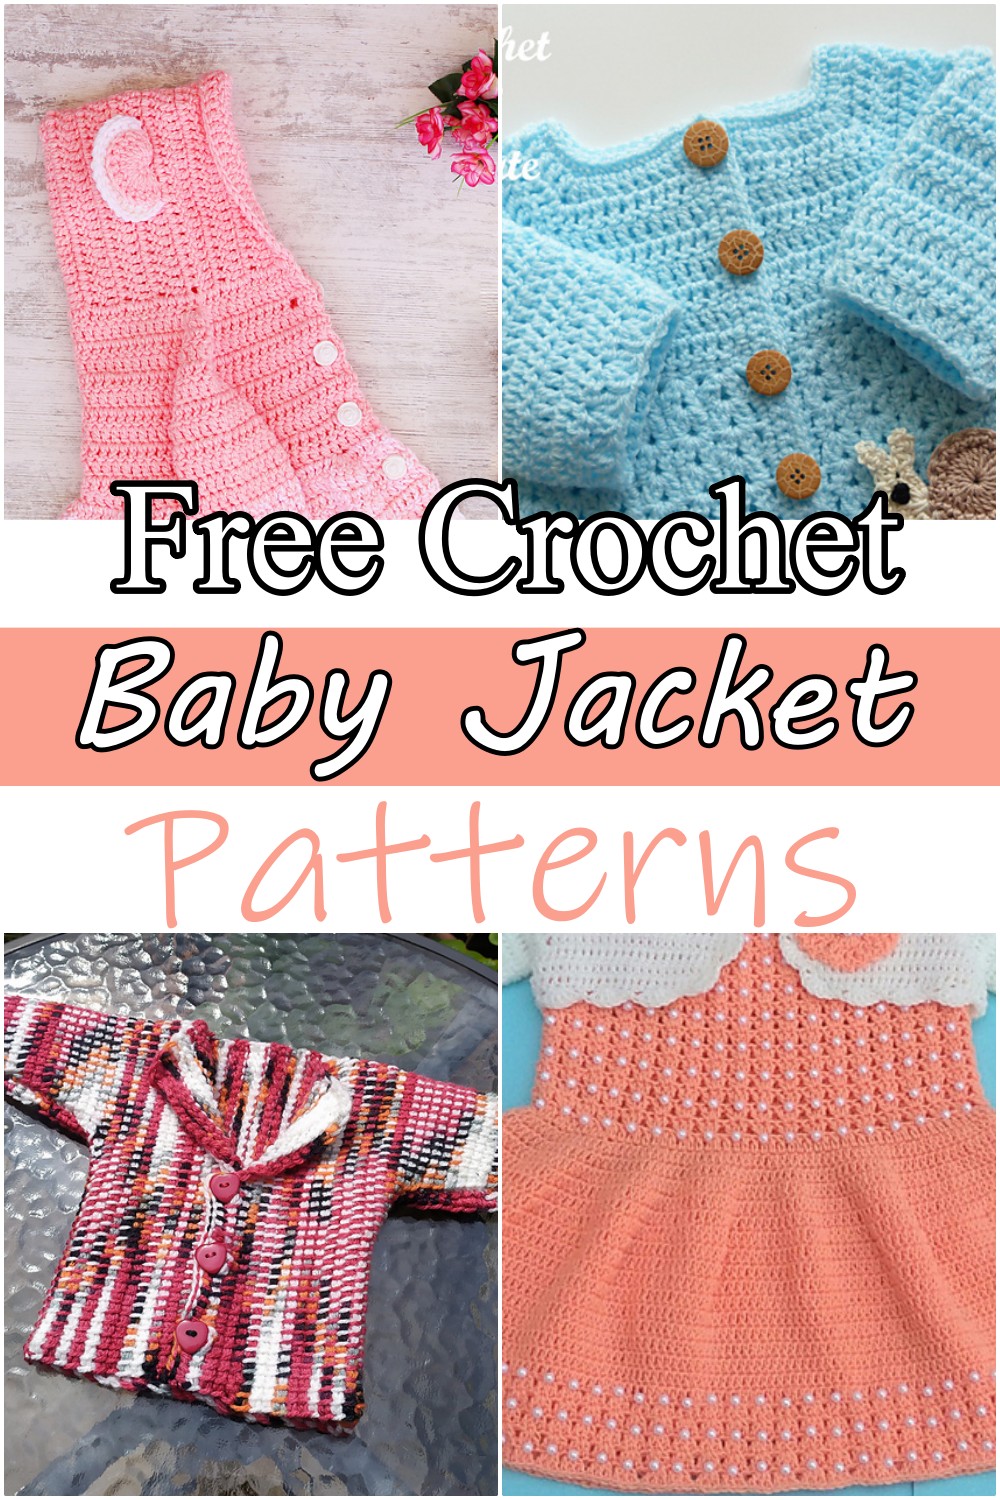 10 Free Crochet Baby Jacket Patterns